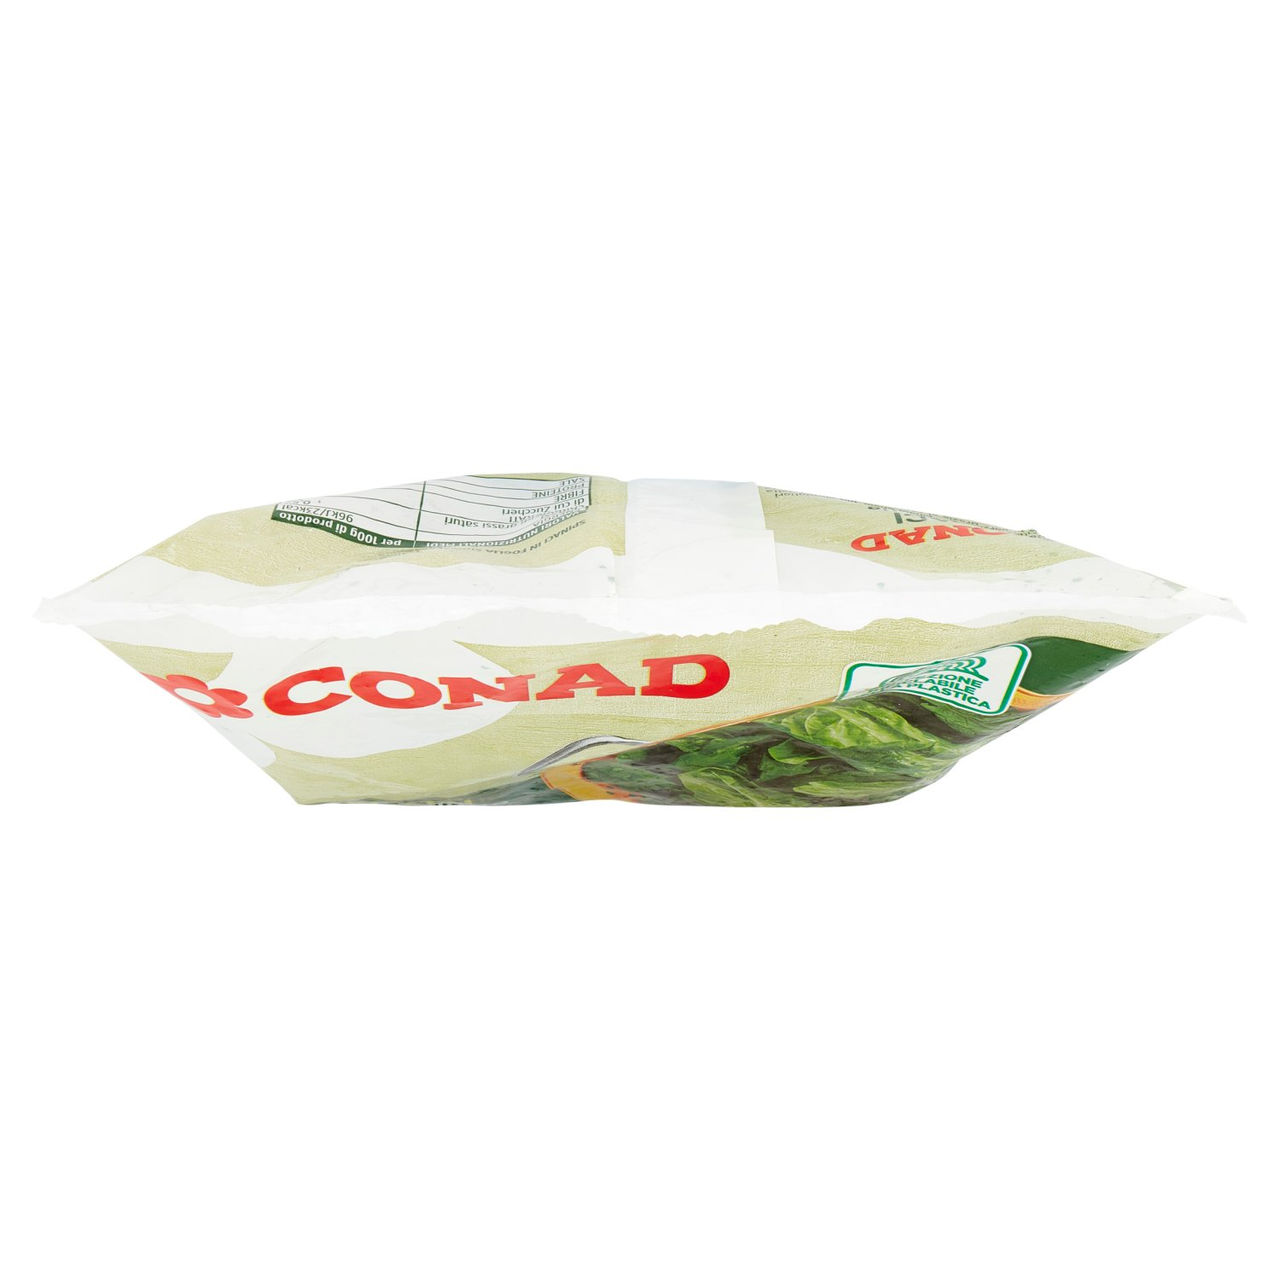 Spinaci in Soffici Foglie Surgelati 600 g Conad